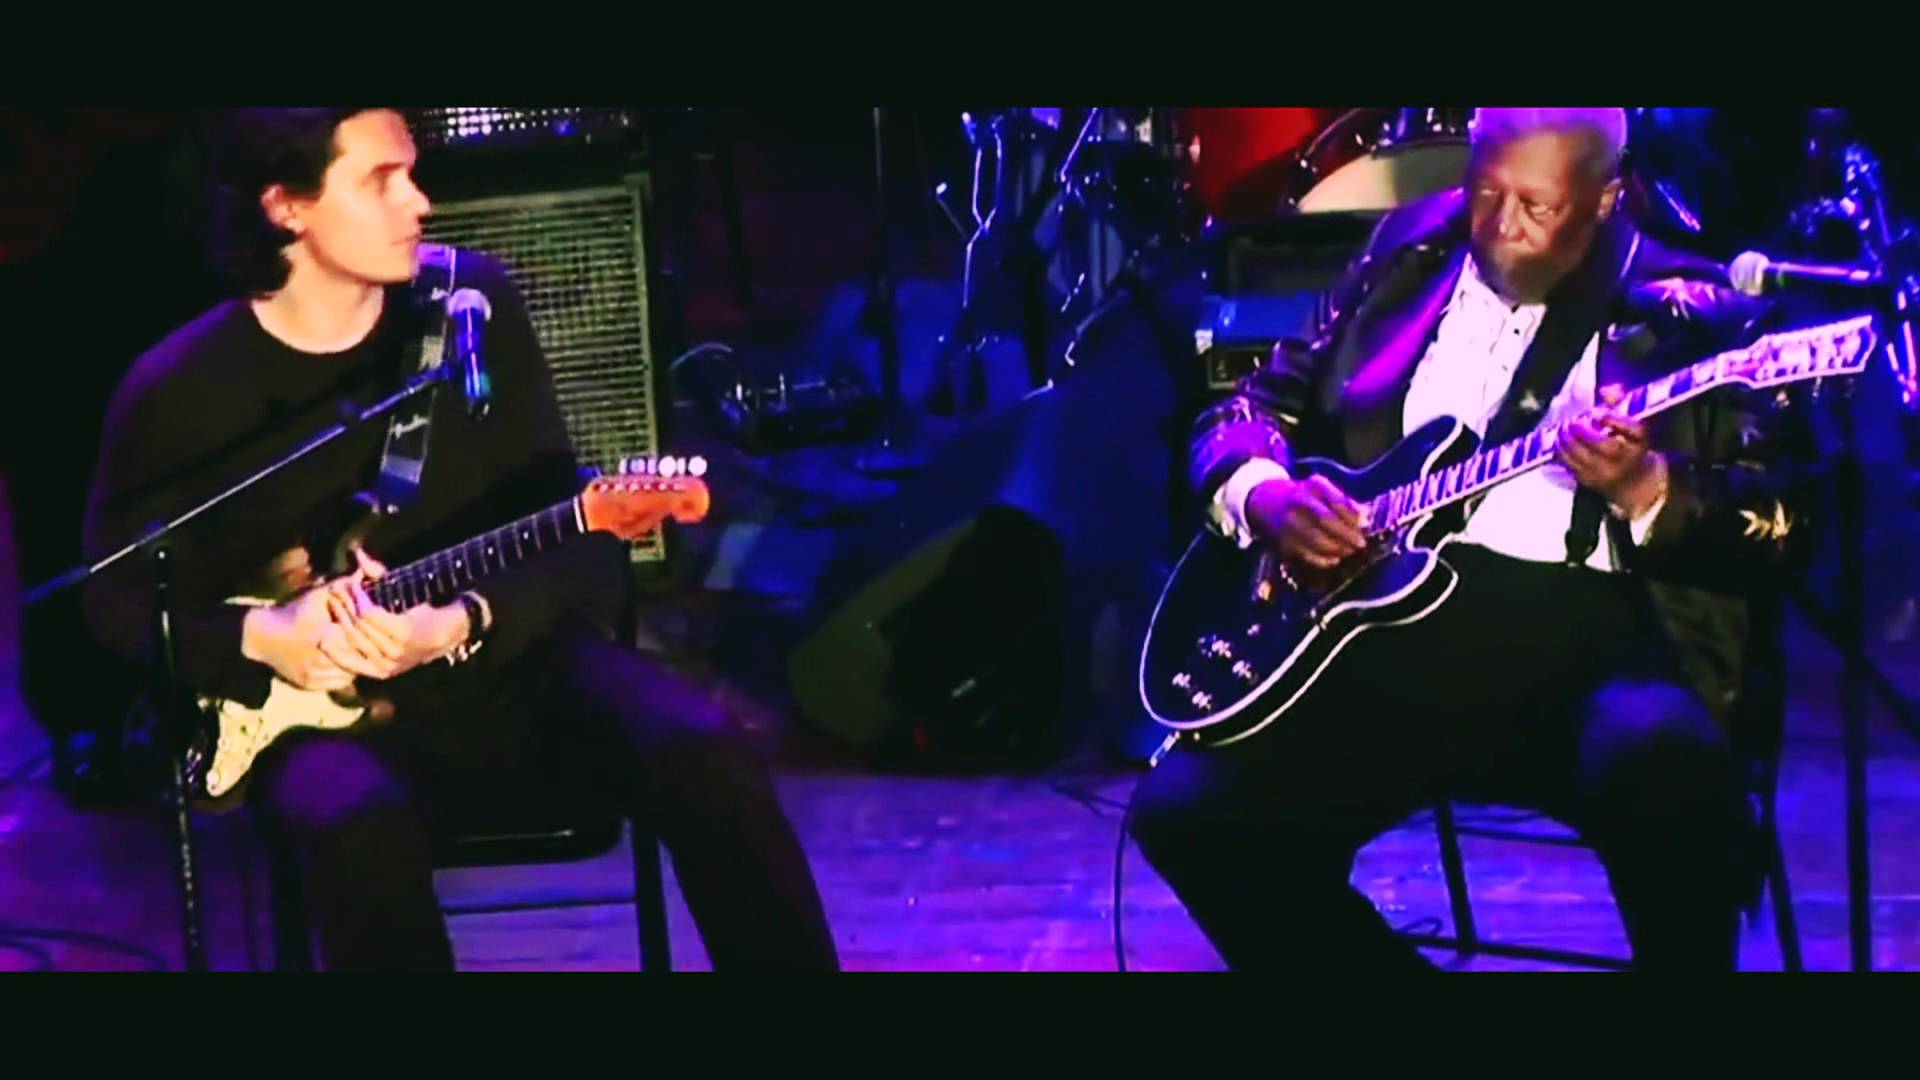 BB King & John Mayer, “King Of Blues” (Completo)